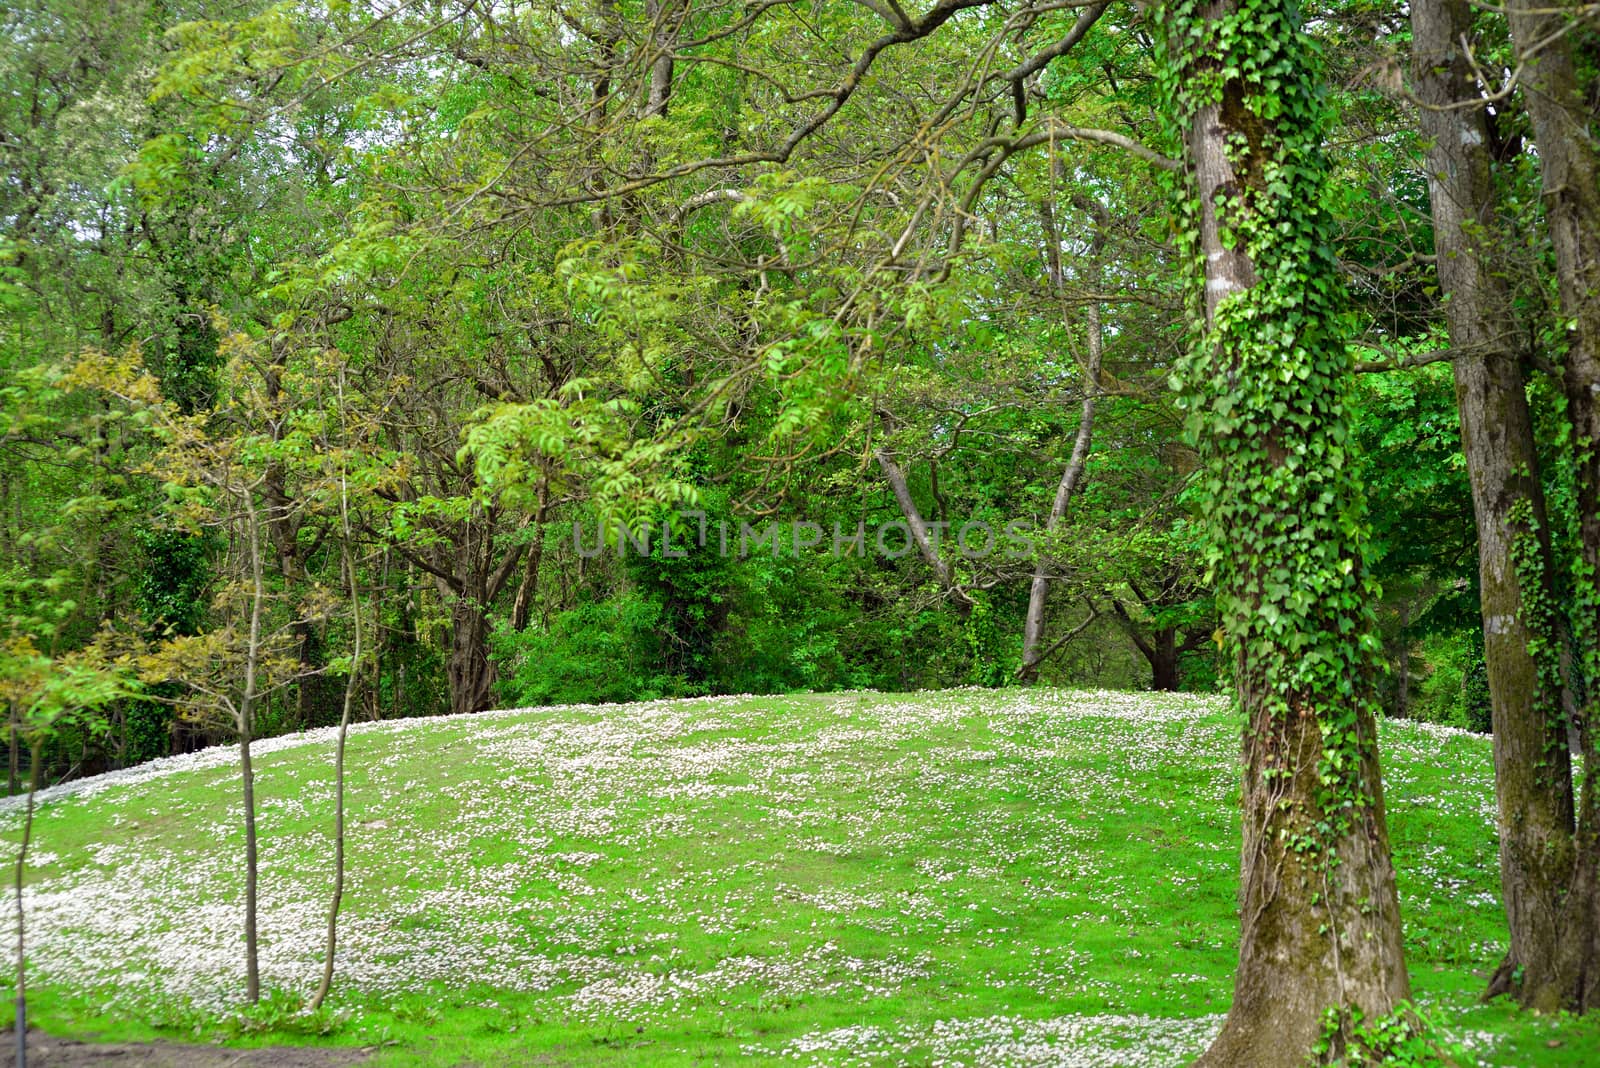 daisy hill in an irish woods